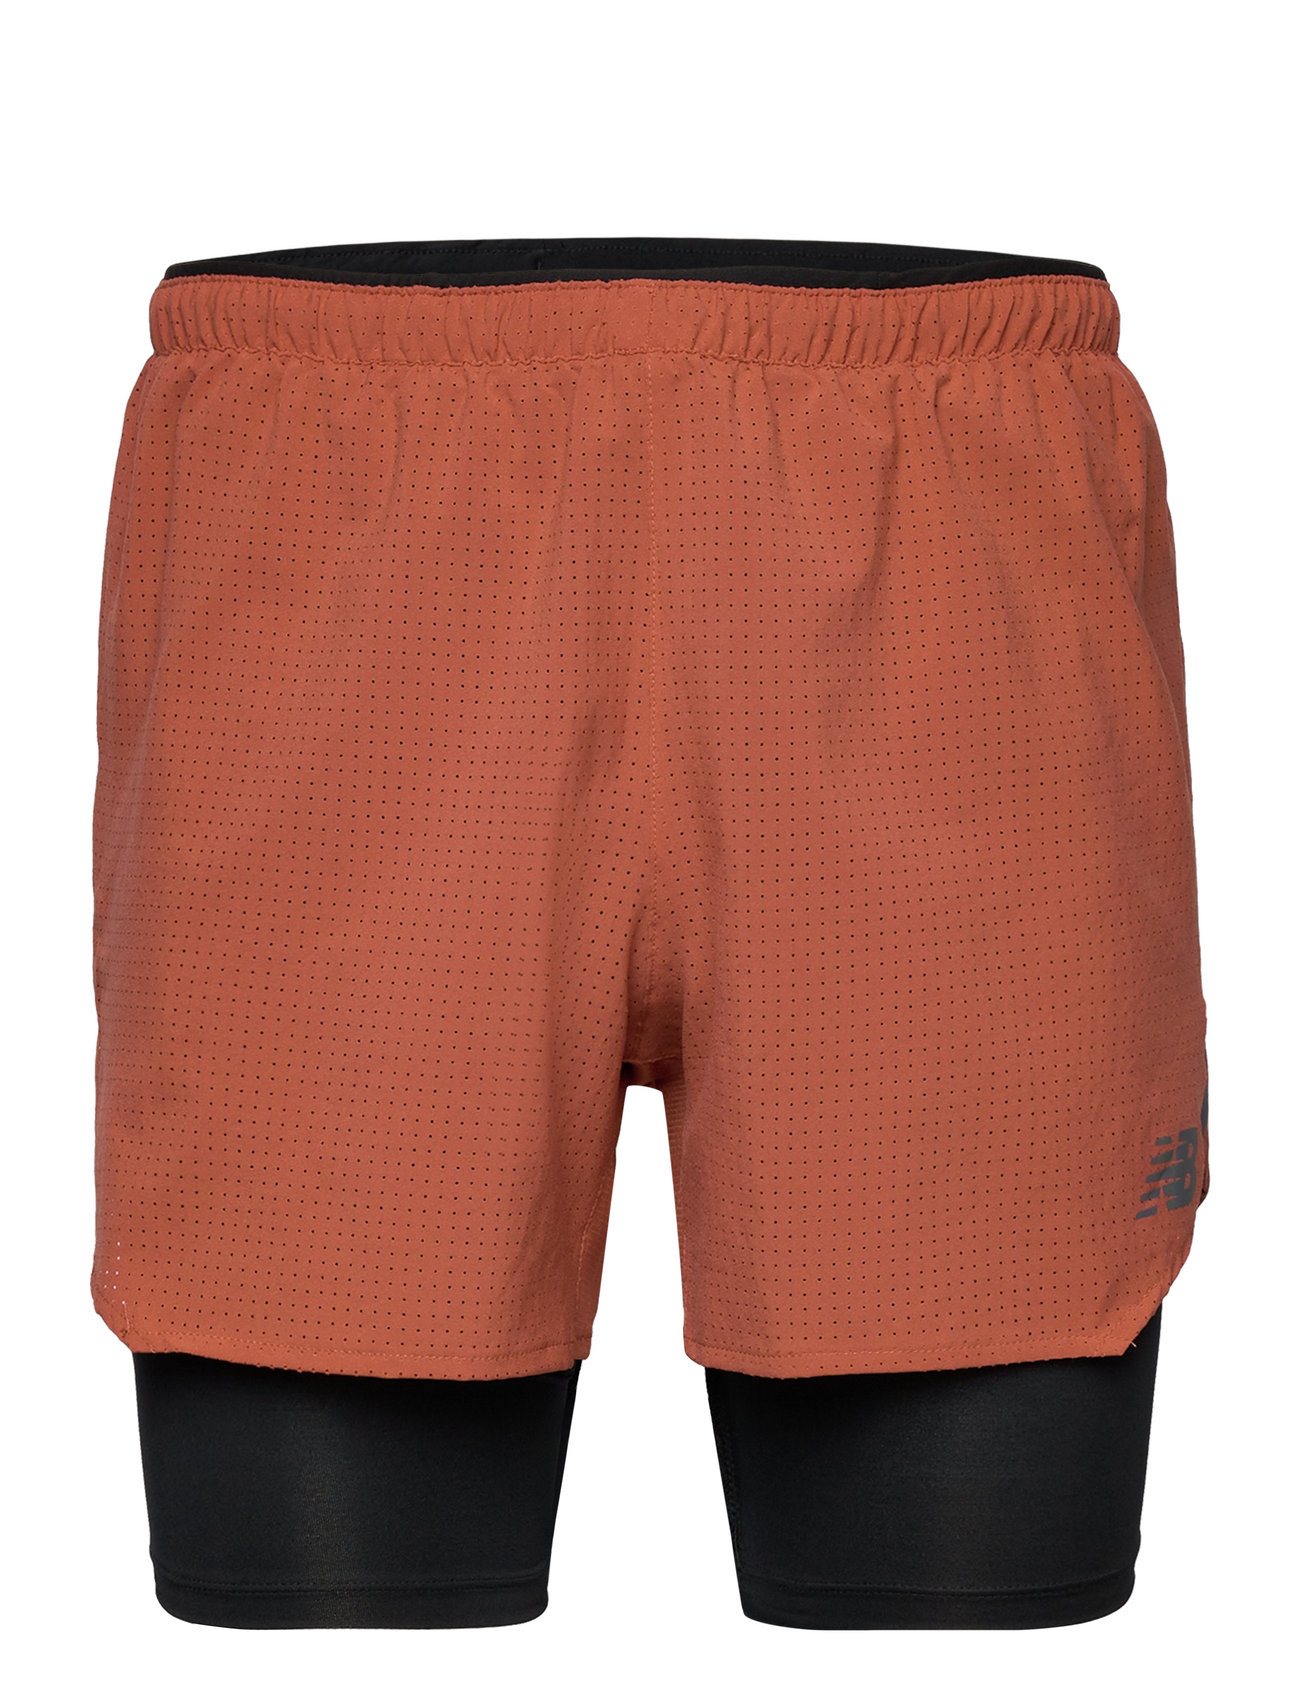 Q Speed 5 Inch 2 In 1 Short Sport Shorts Sport Shorts Orange New Balance